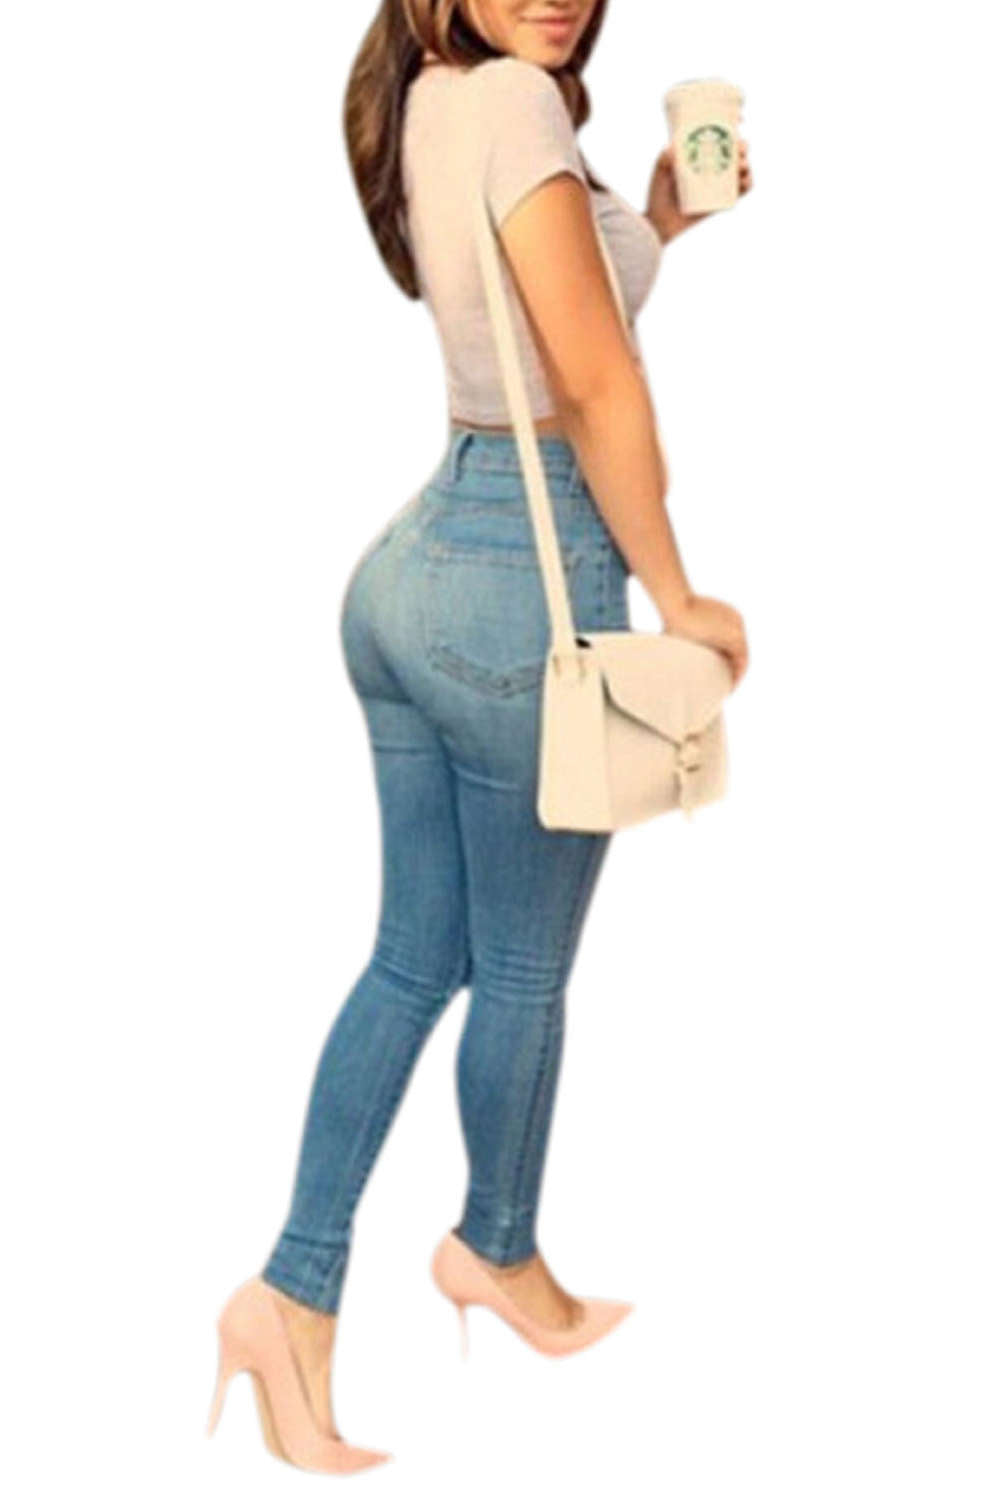 Iyasson New Sexy Women Denim Skinny Pants High Waist Stretch Jeans Slim Pencil Trousers